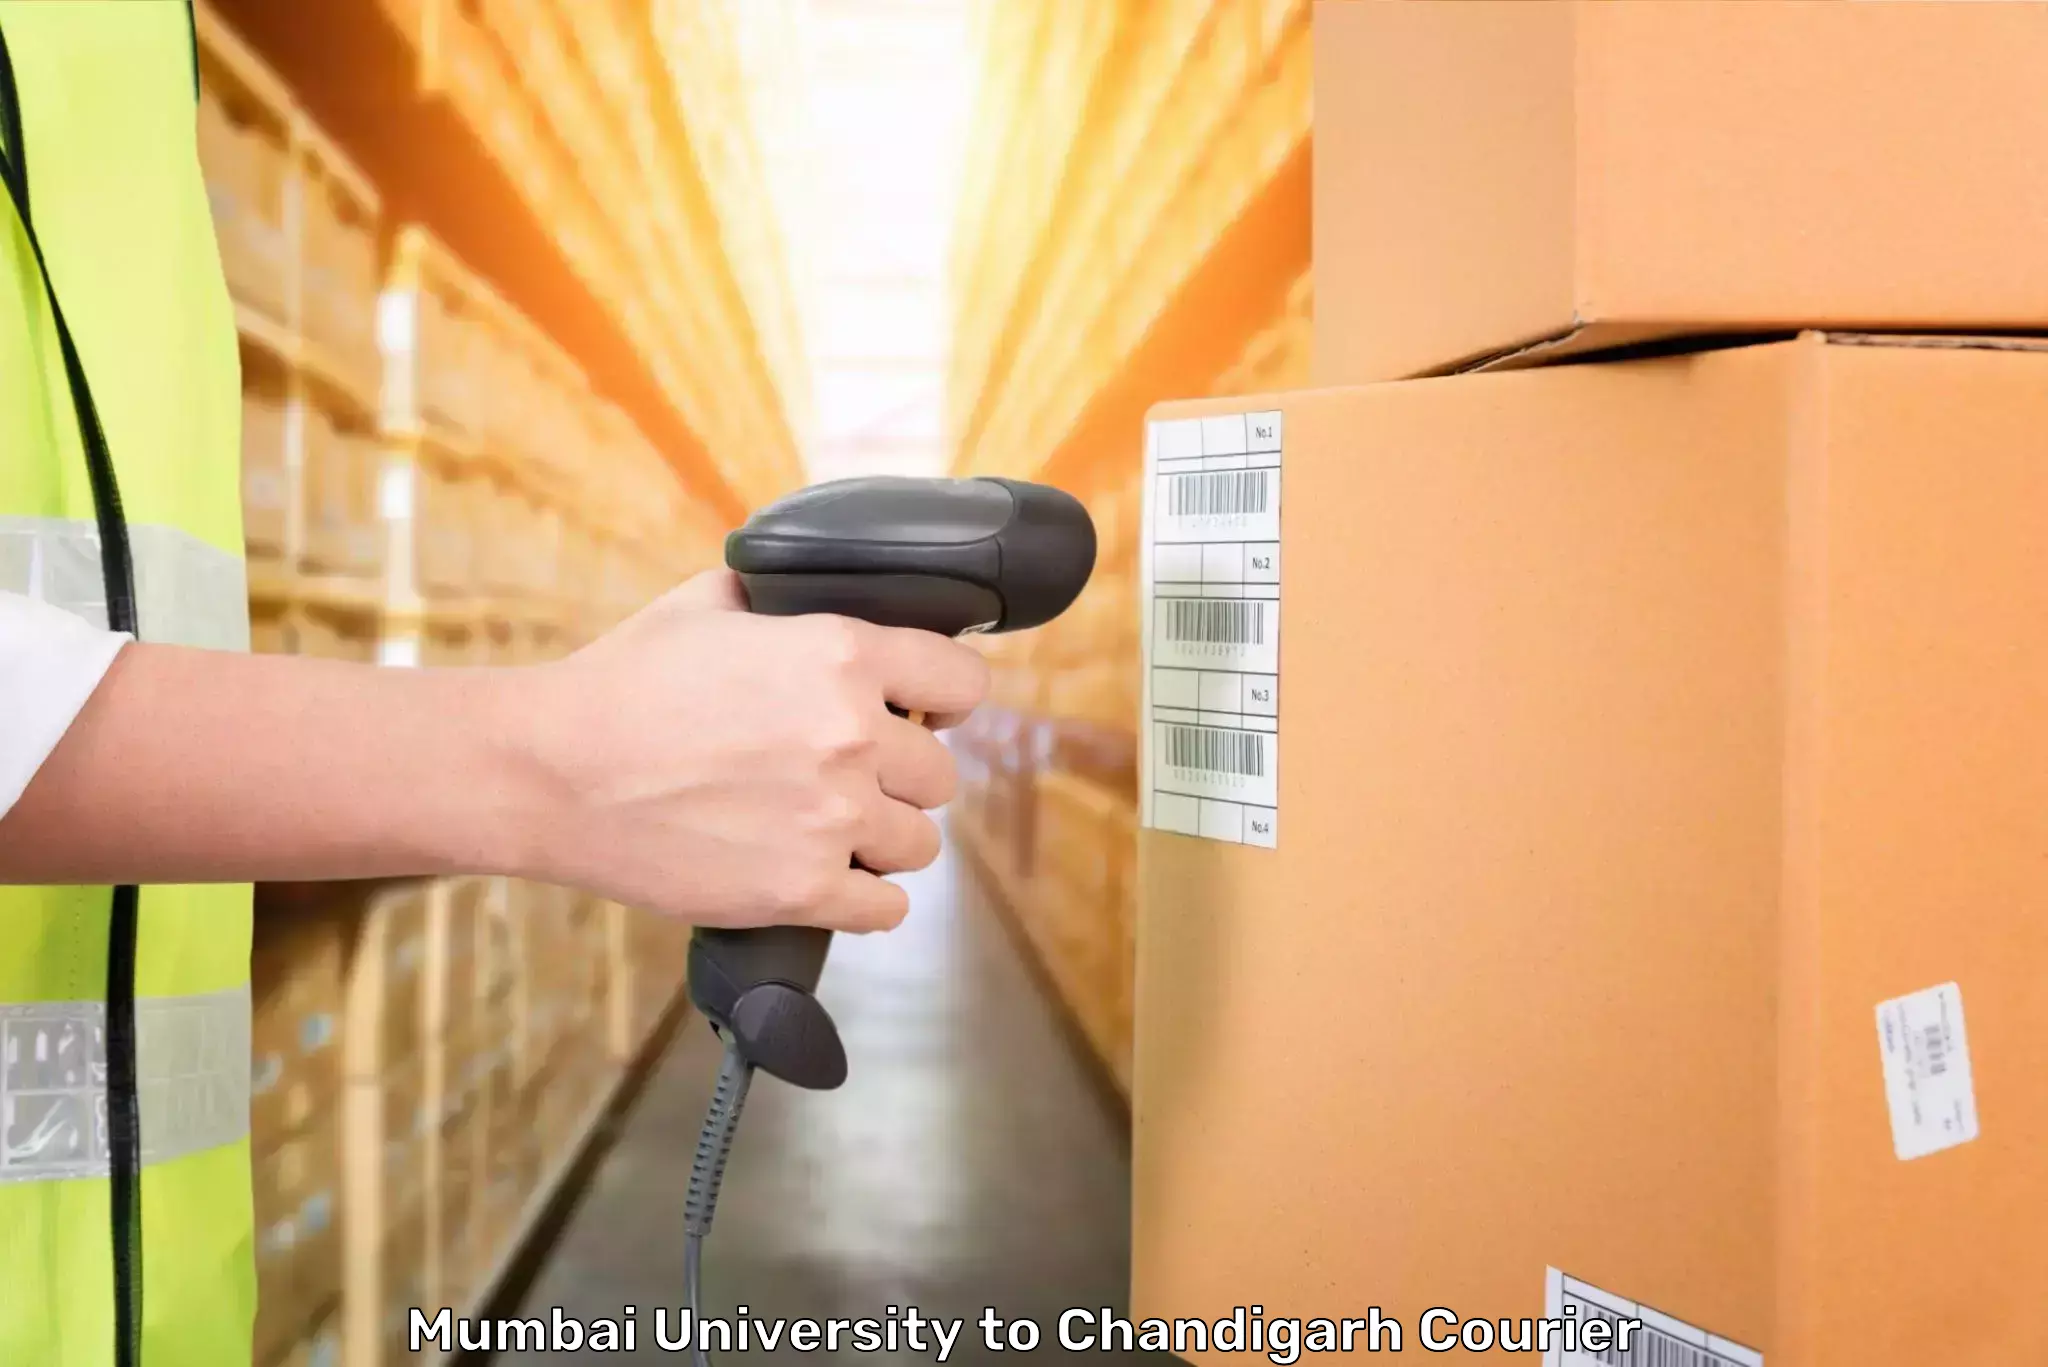 Baggage relocation service Mumbai University to Chandigarh